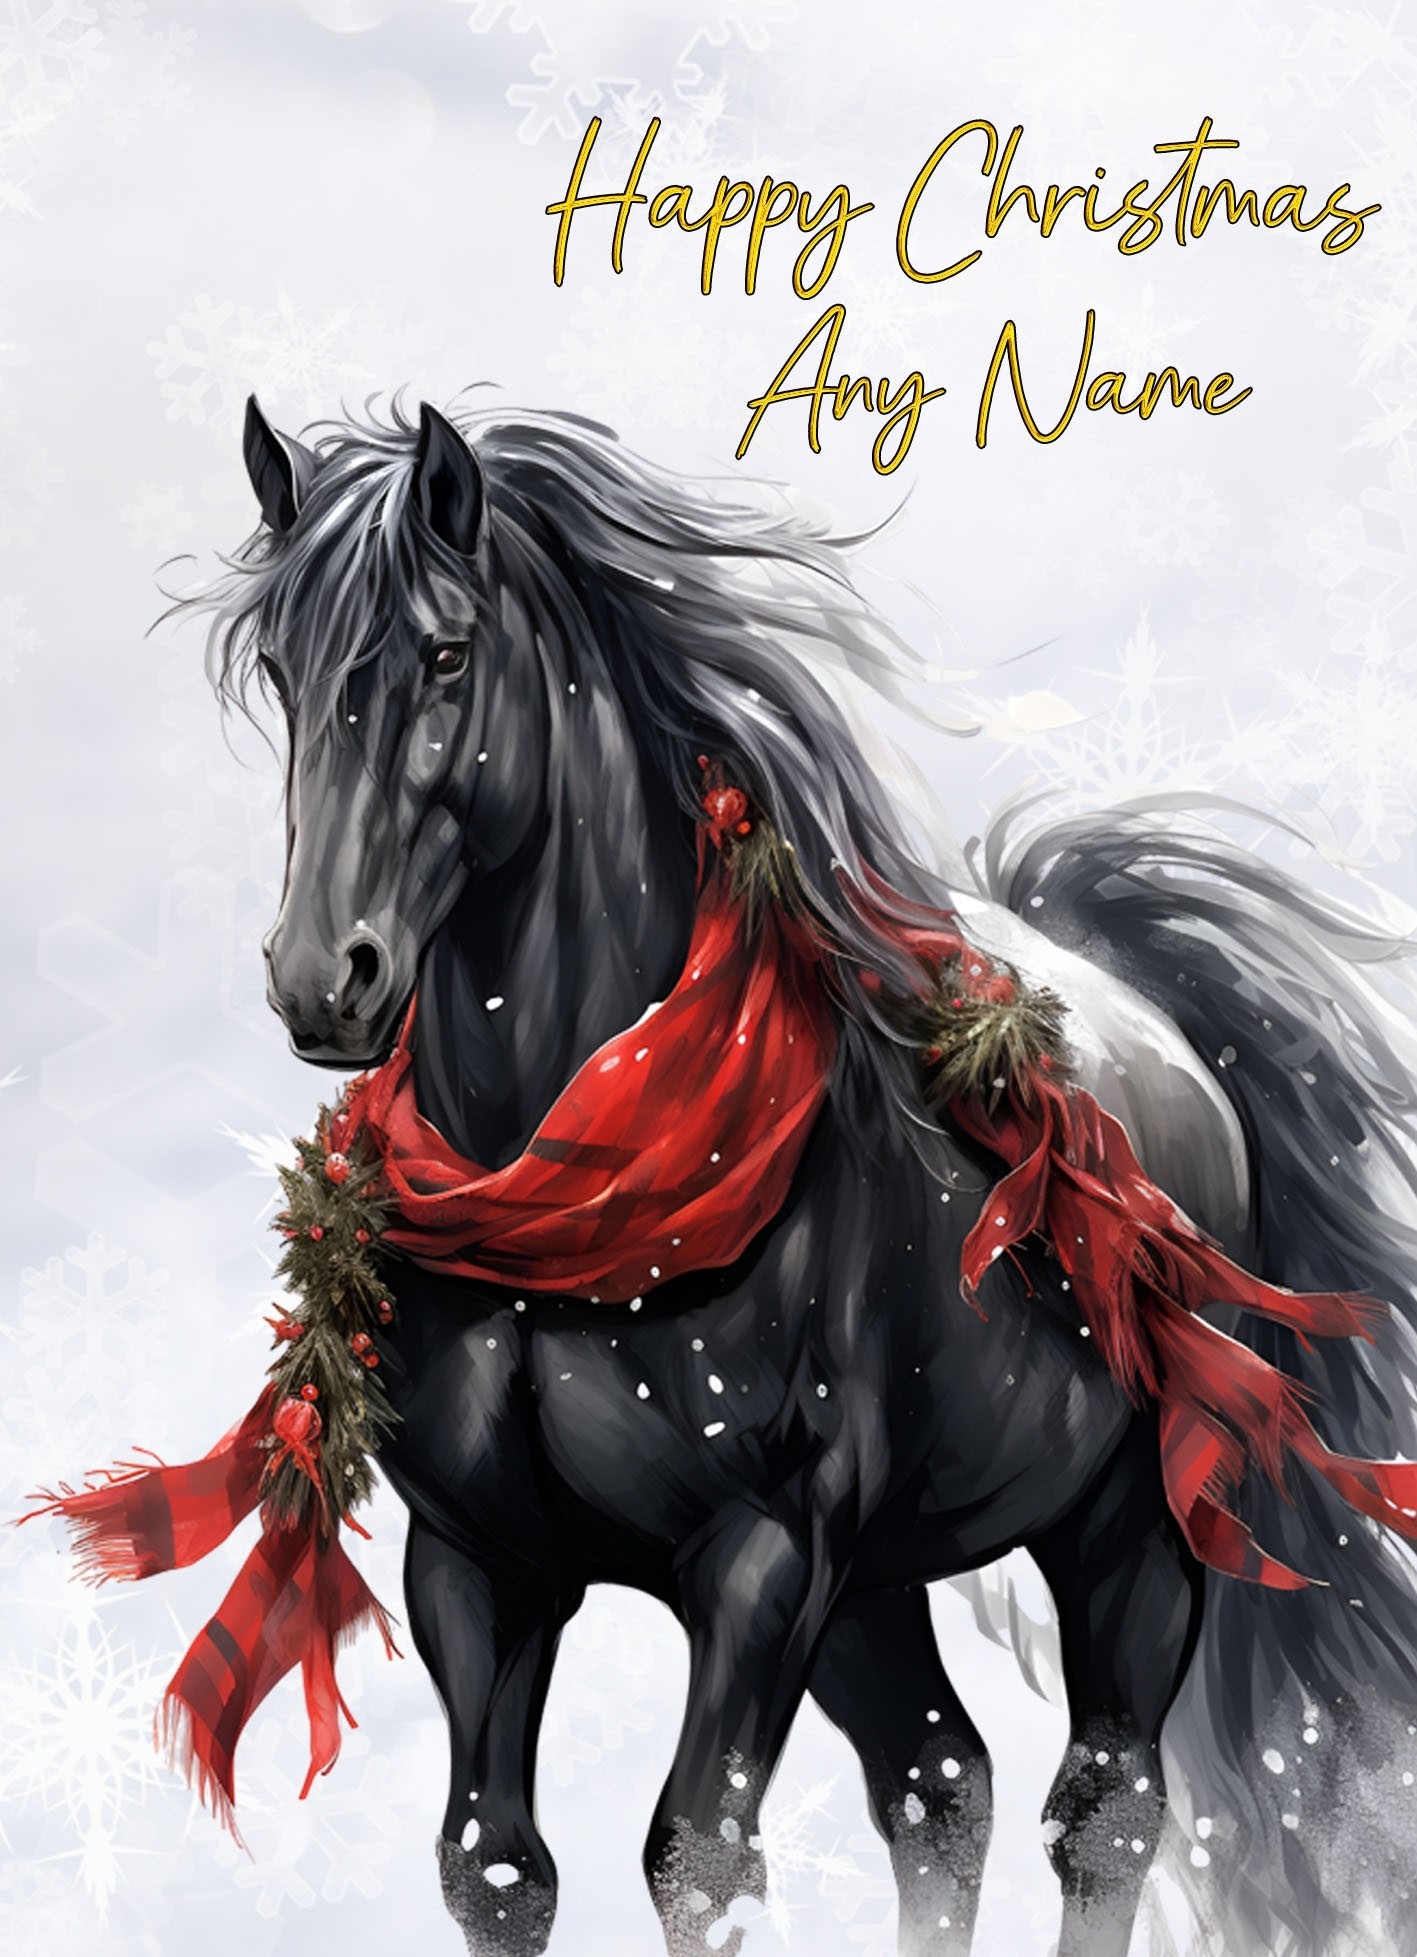 Personalised Horse Art Christmas Card (Design 6)